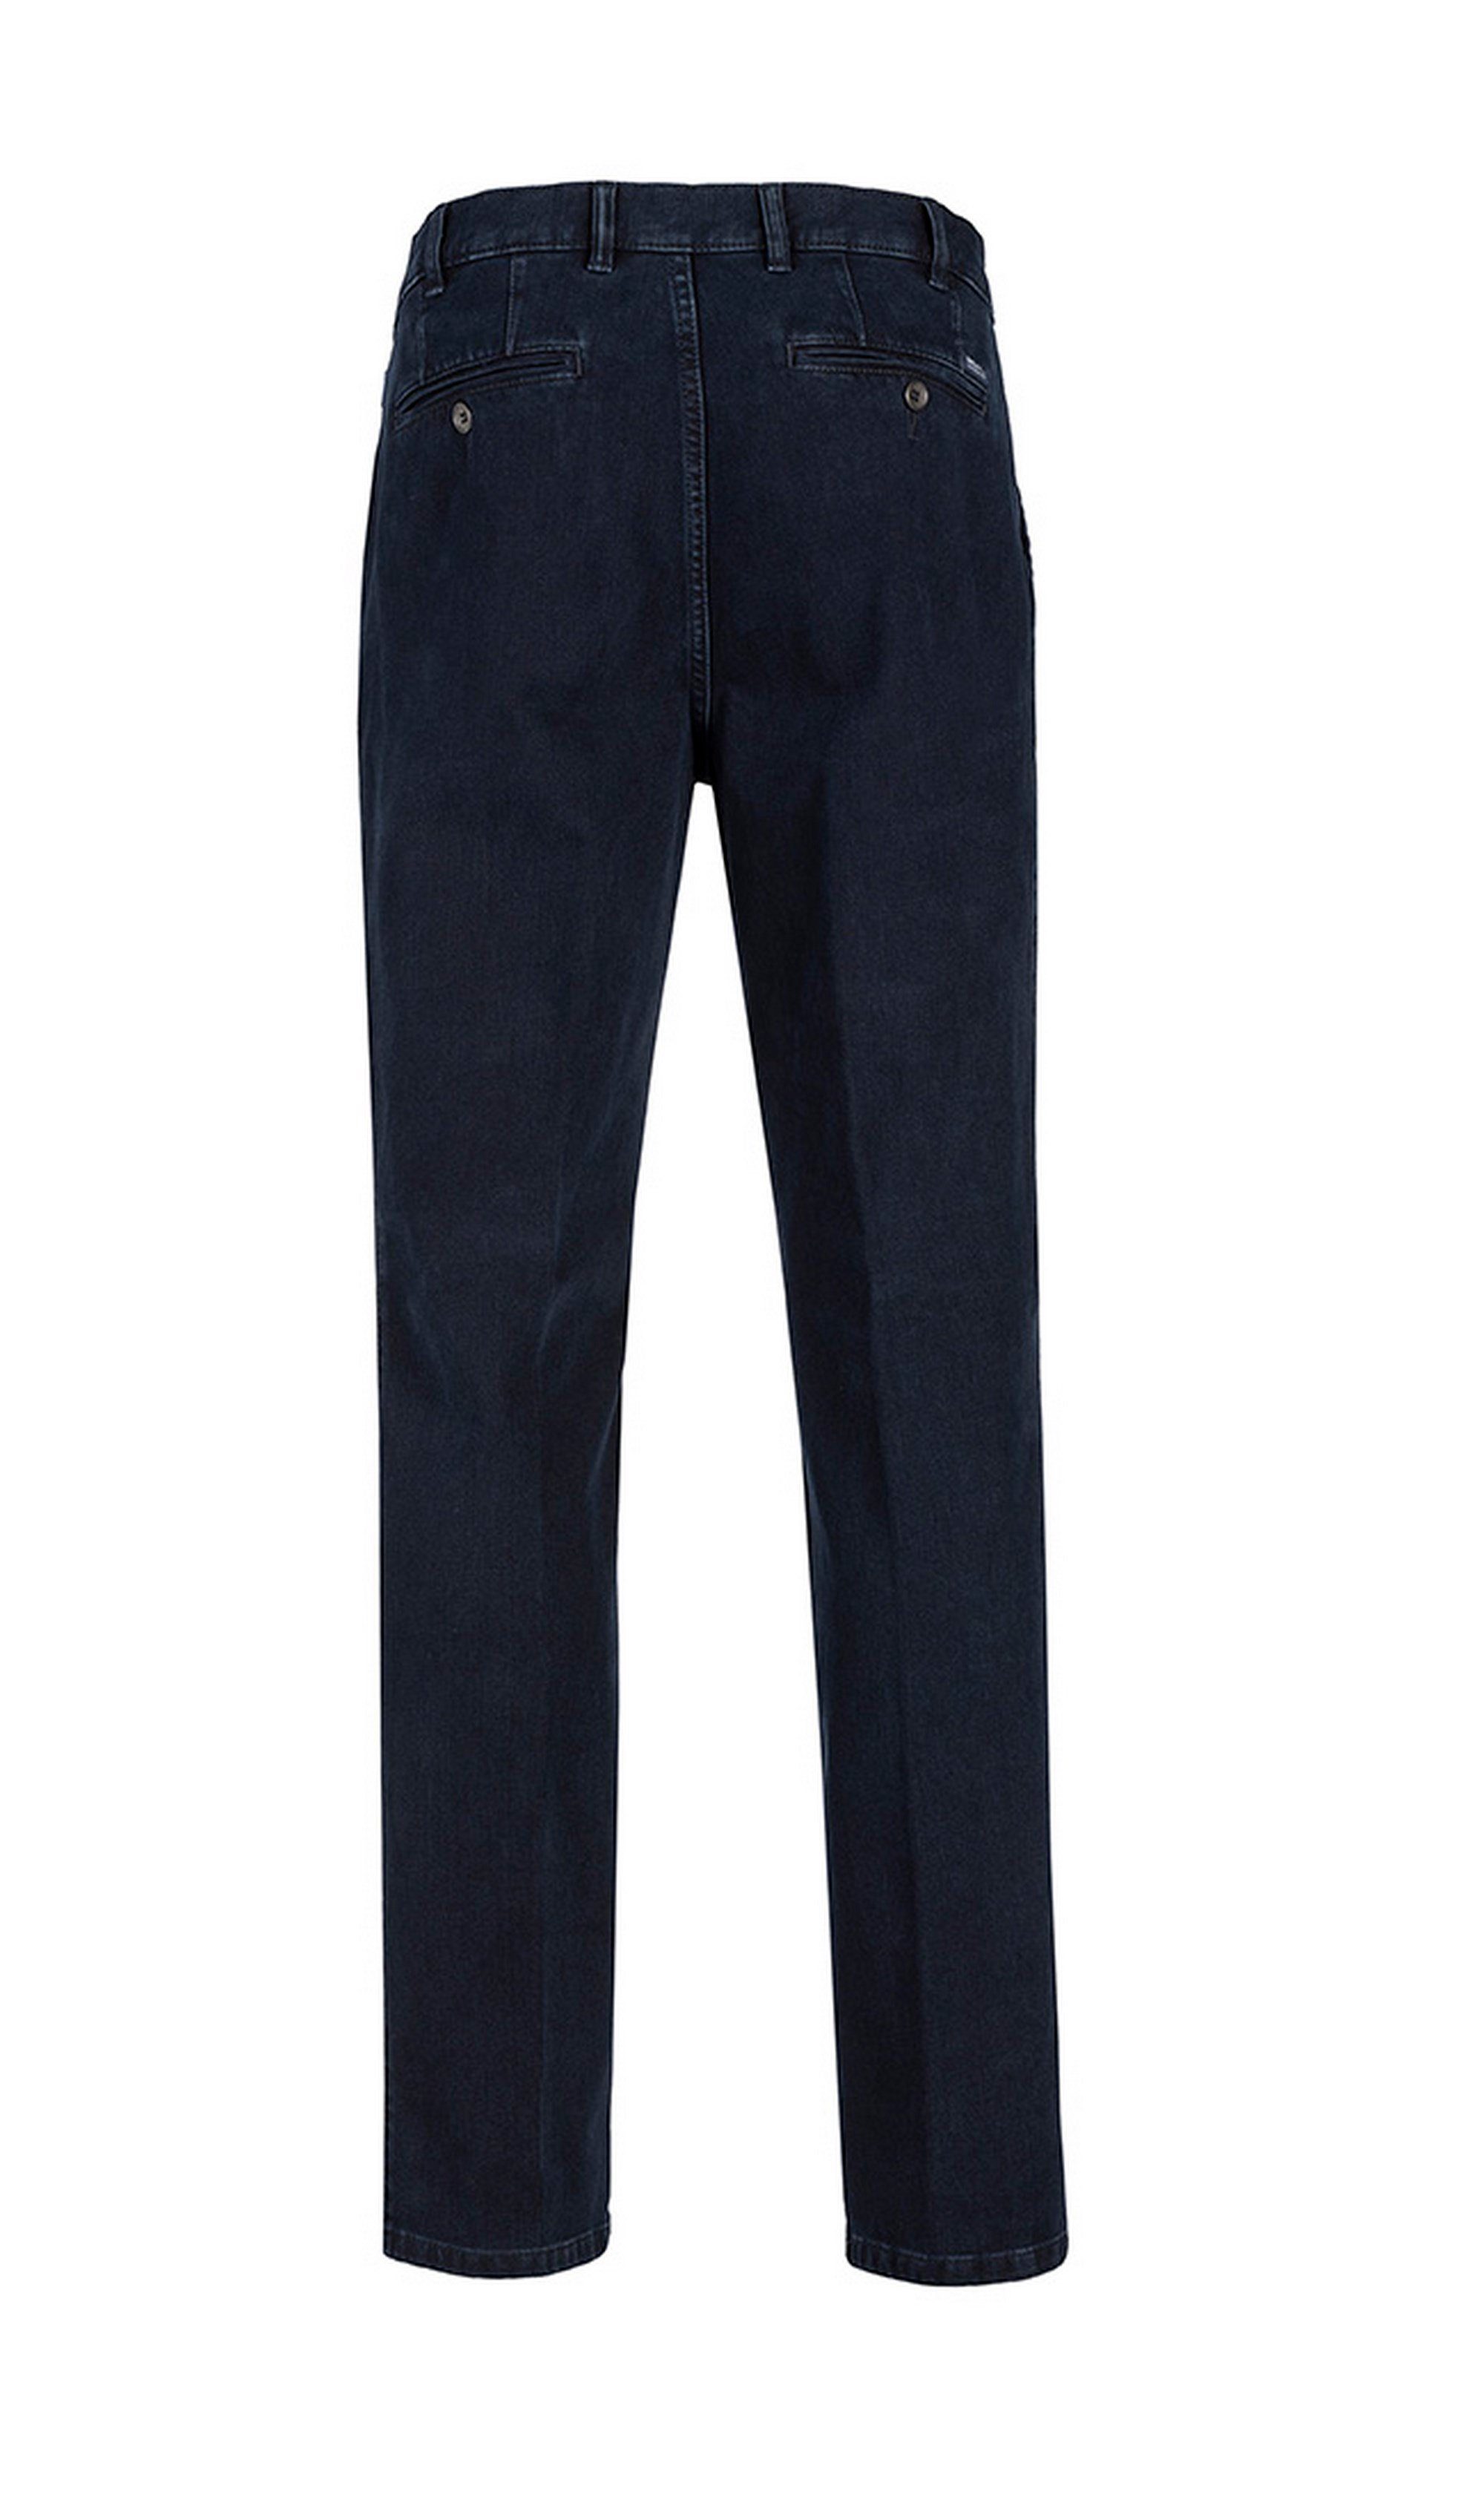 Brühl Bequeme mit Parma DO Tragekomfort Jeans optimalem dunkelblau